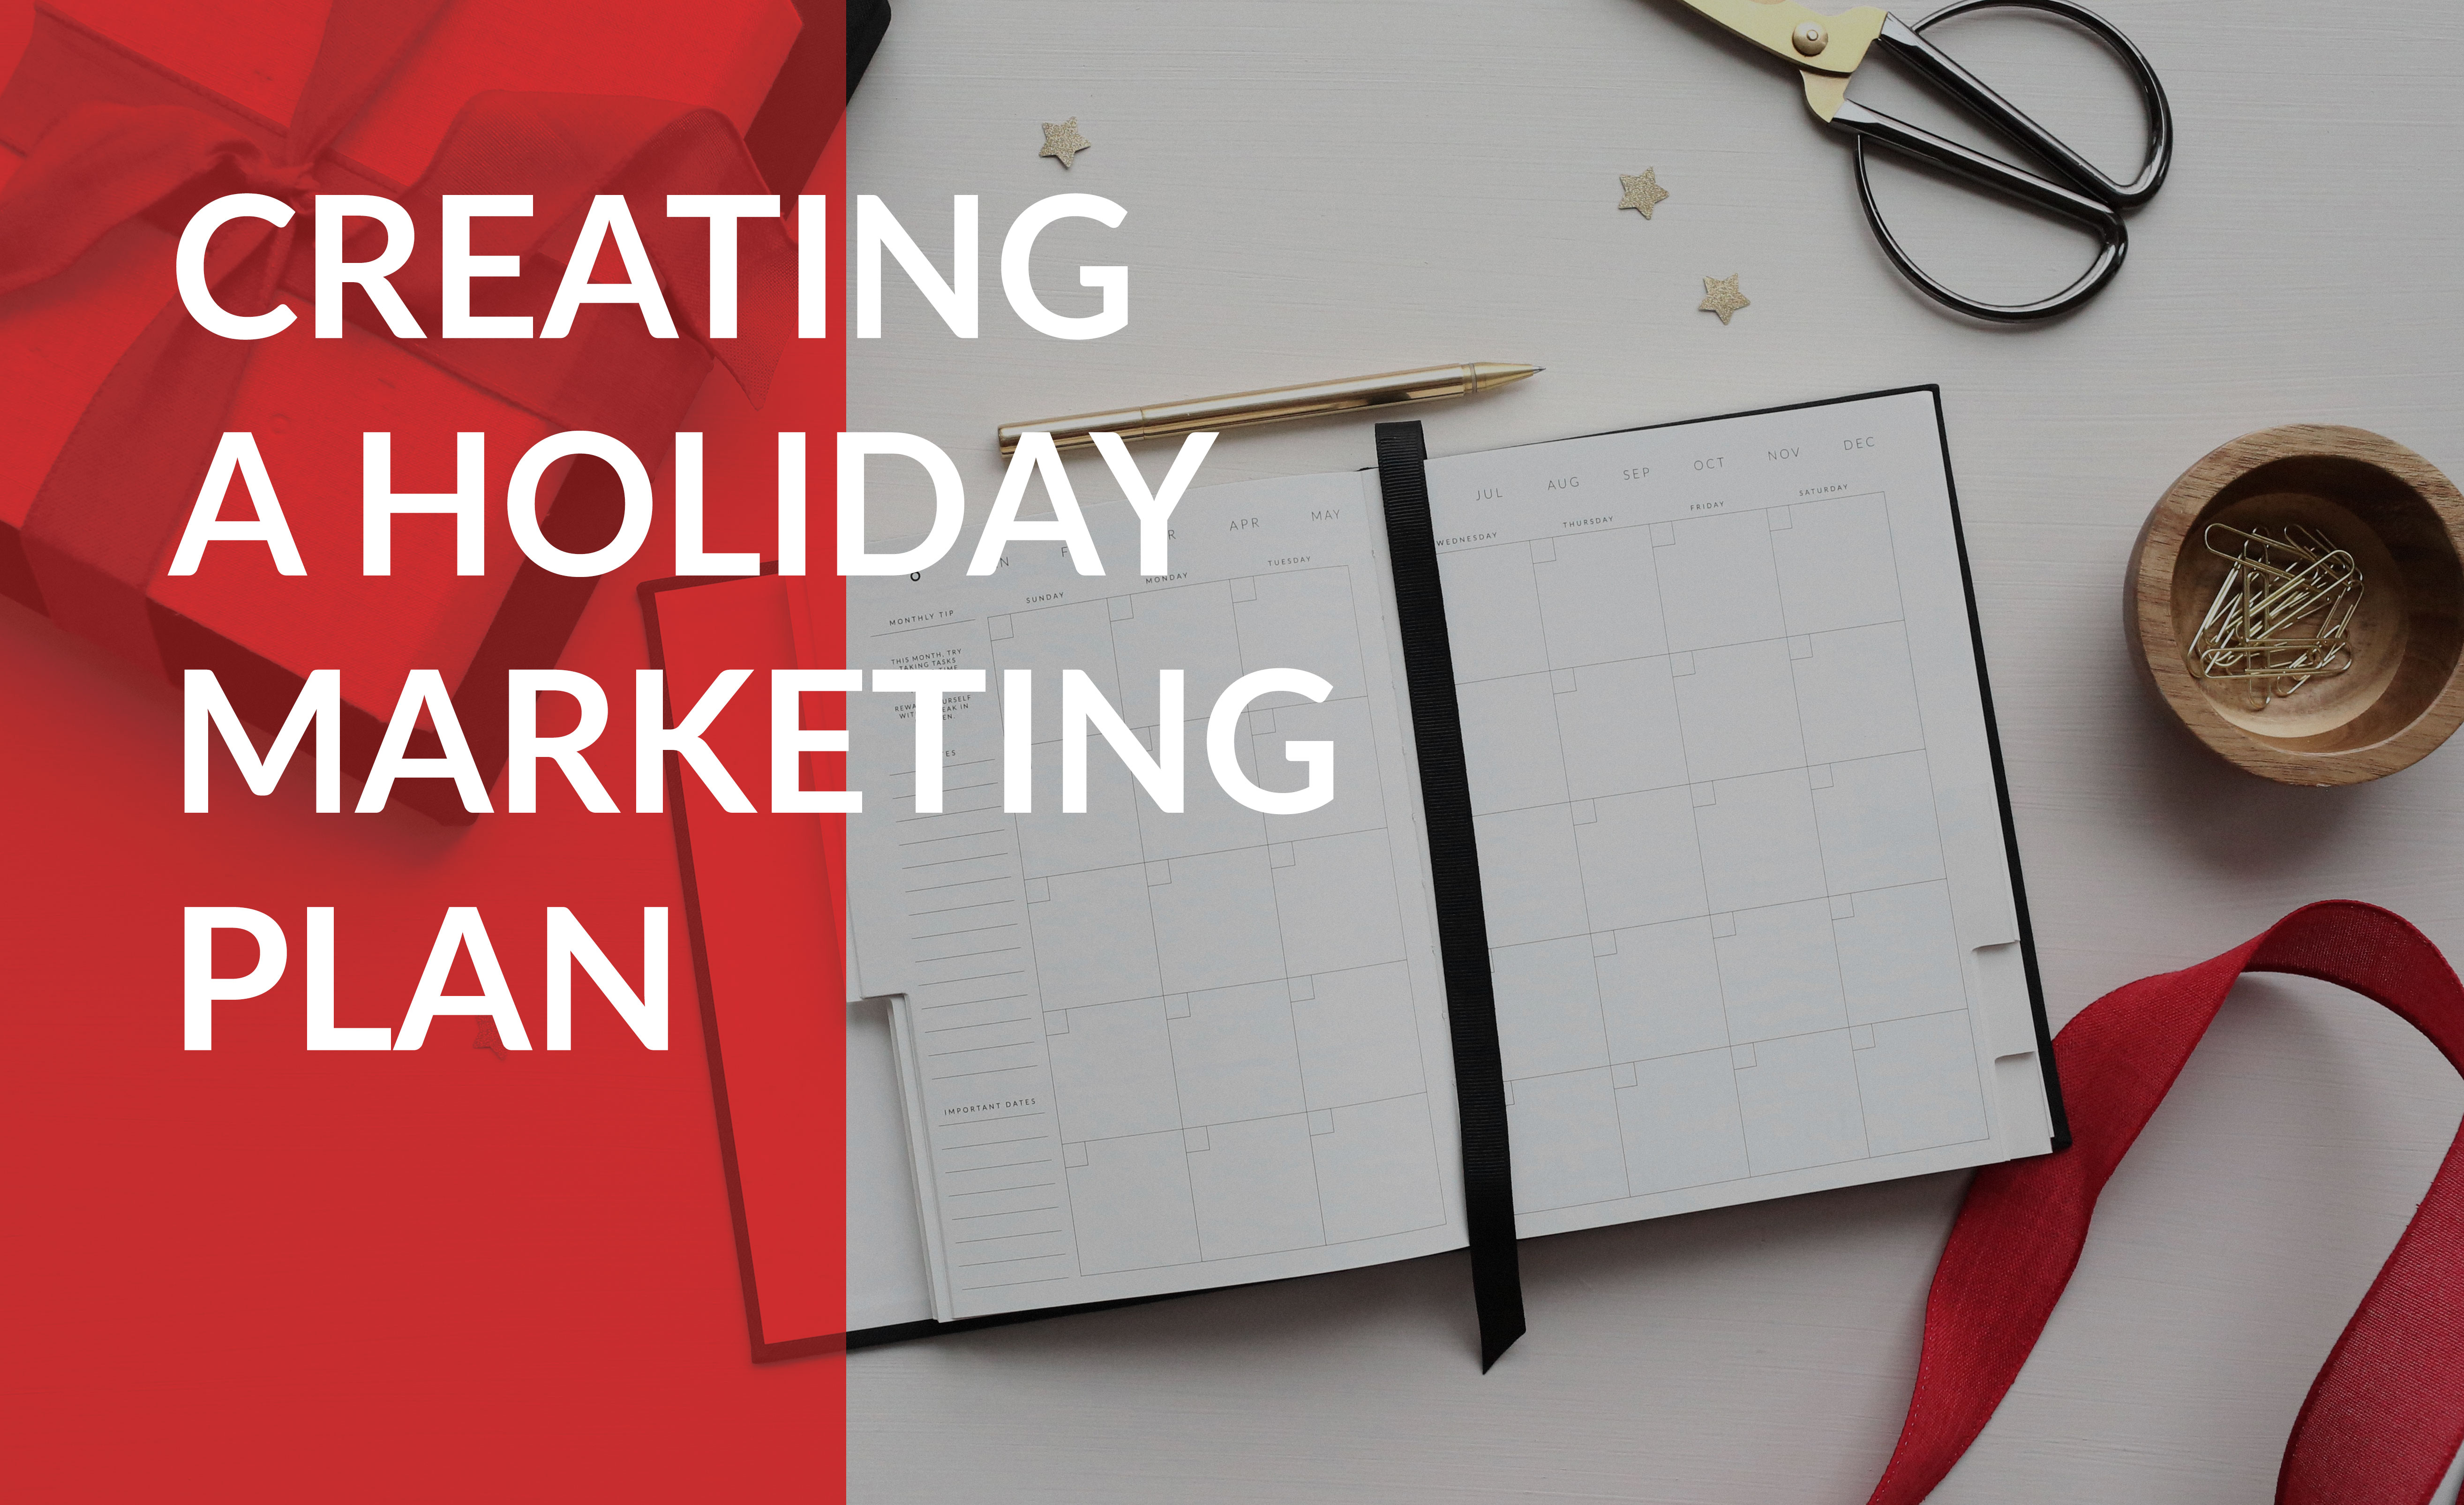 Creating a holiday marketing plan